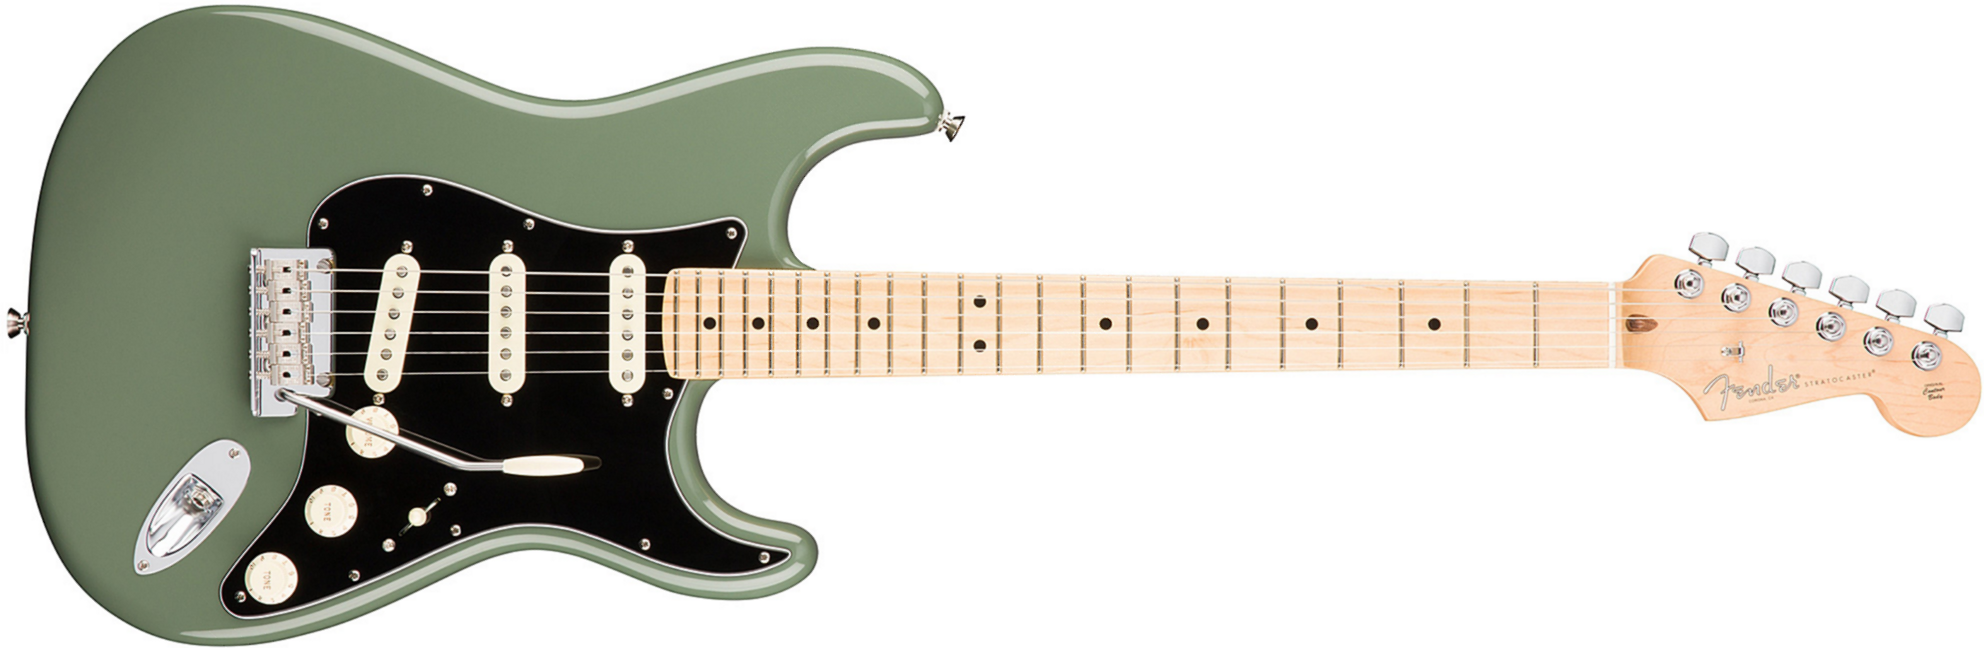 Fender Strat American Professional 2017 3s Usa Mn - Antique Olive - Guitare Électrique Forme Str - Main picture